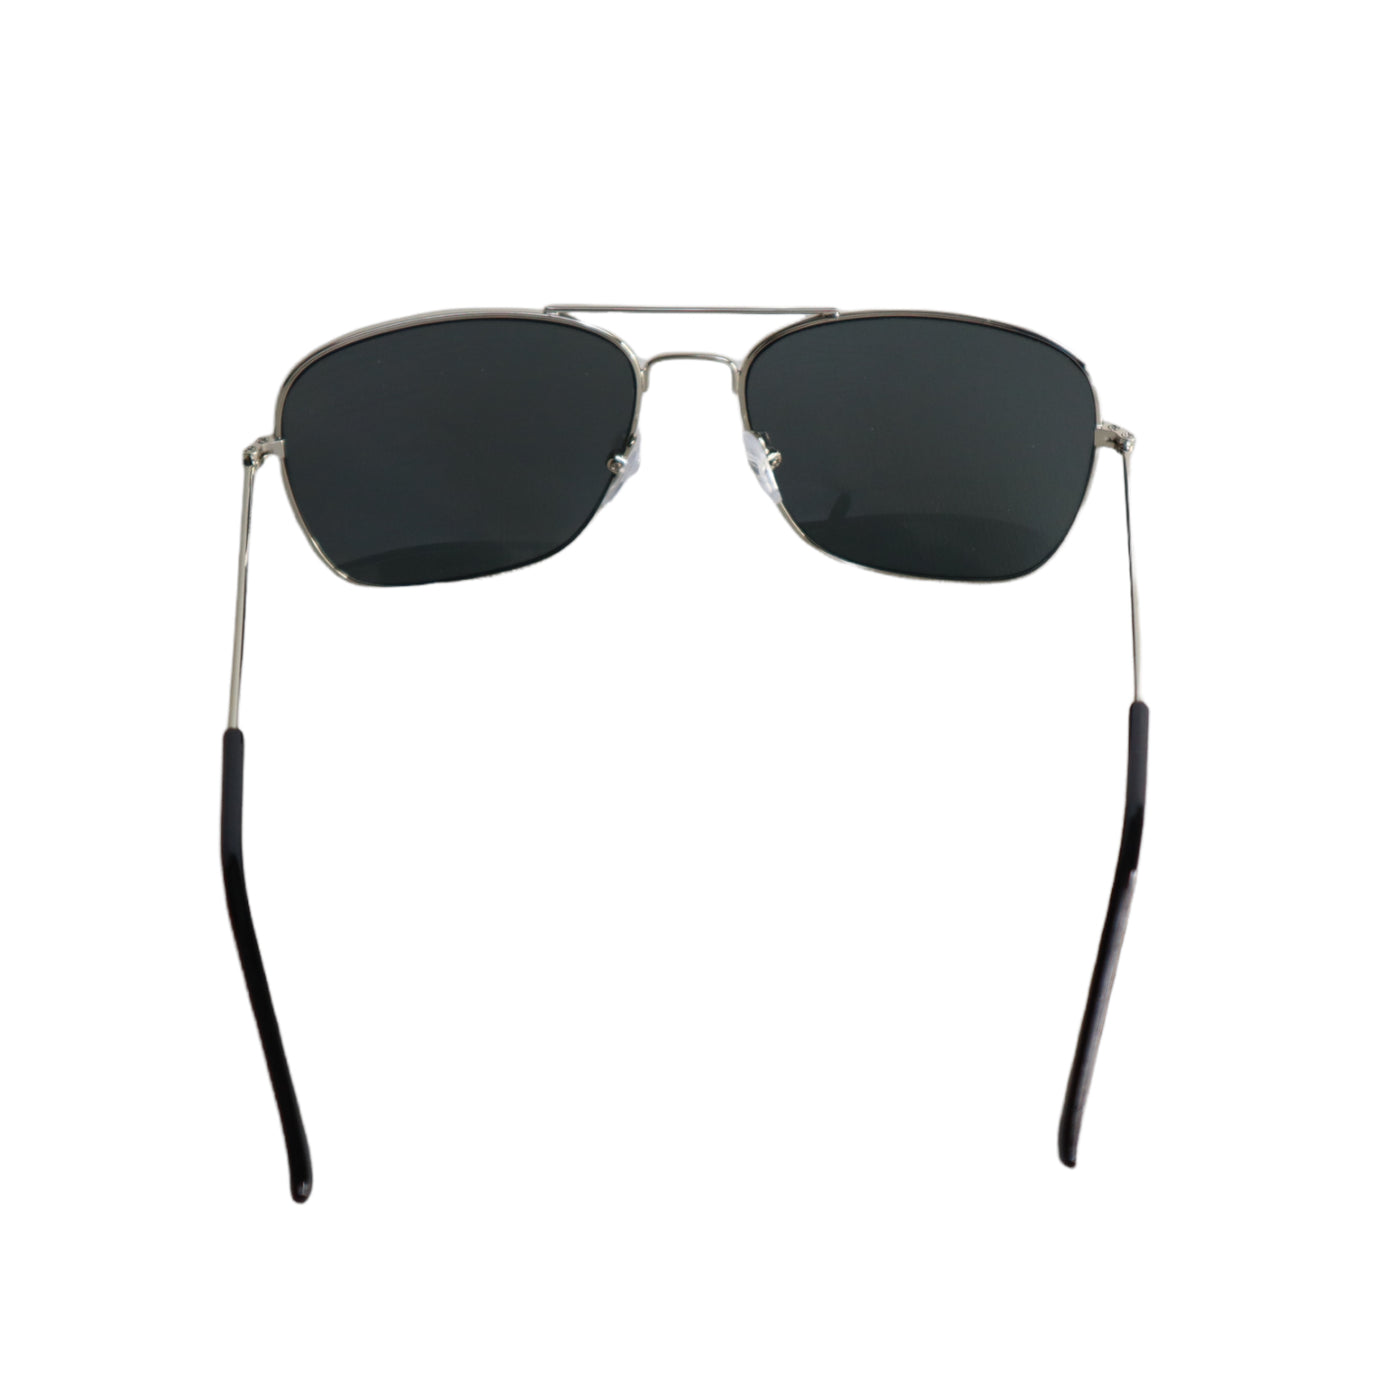 AIR FORCE AVIATOR SERIES SILVER Color Metal Frames Sunglasses w/ BLACK Lens